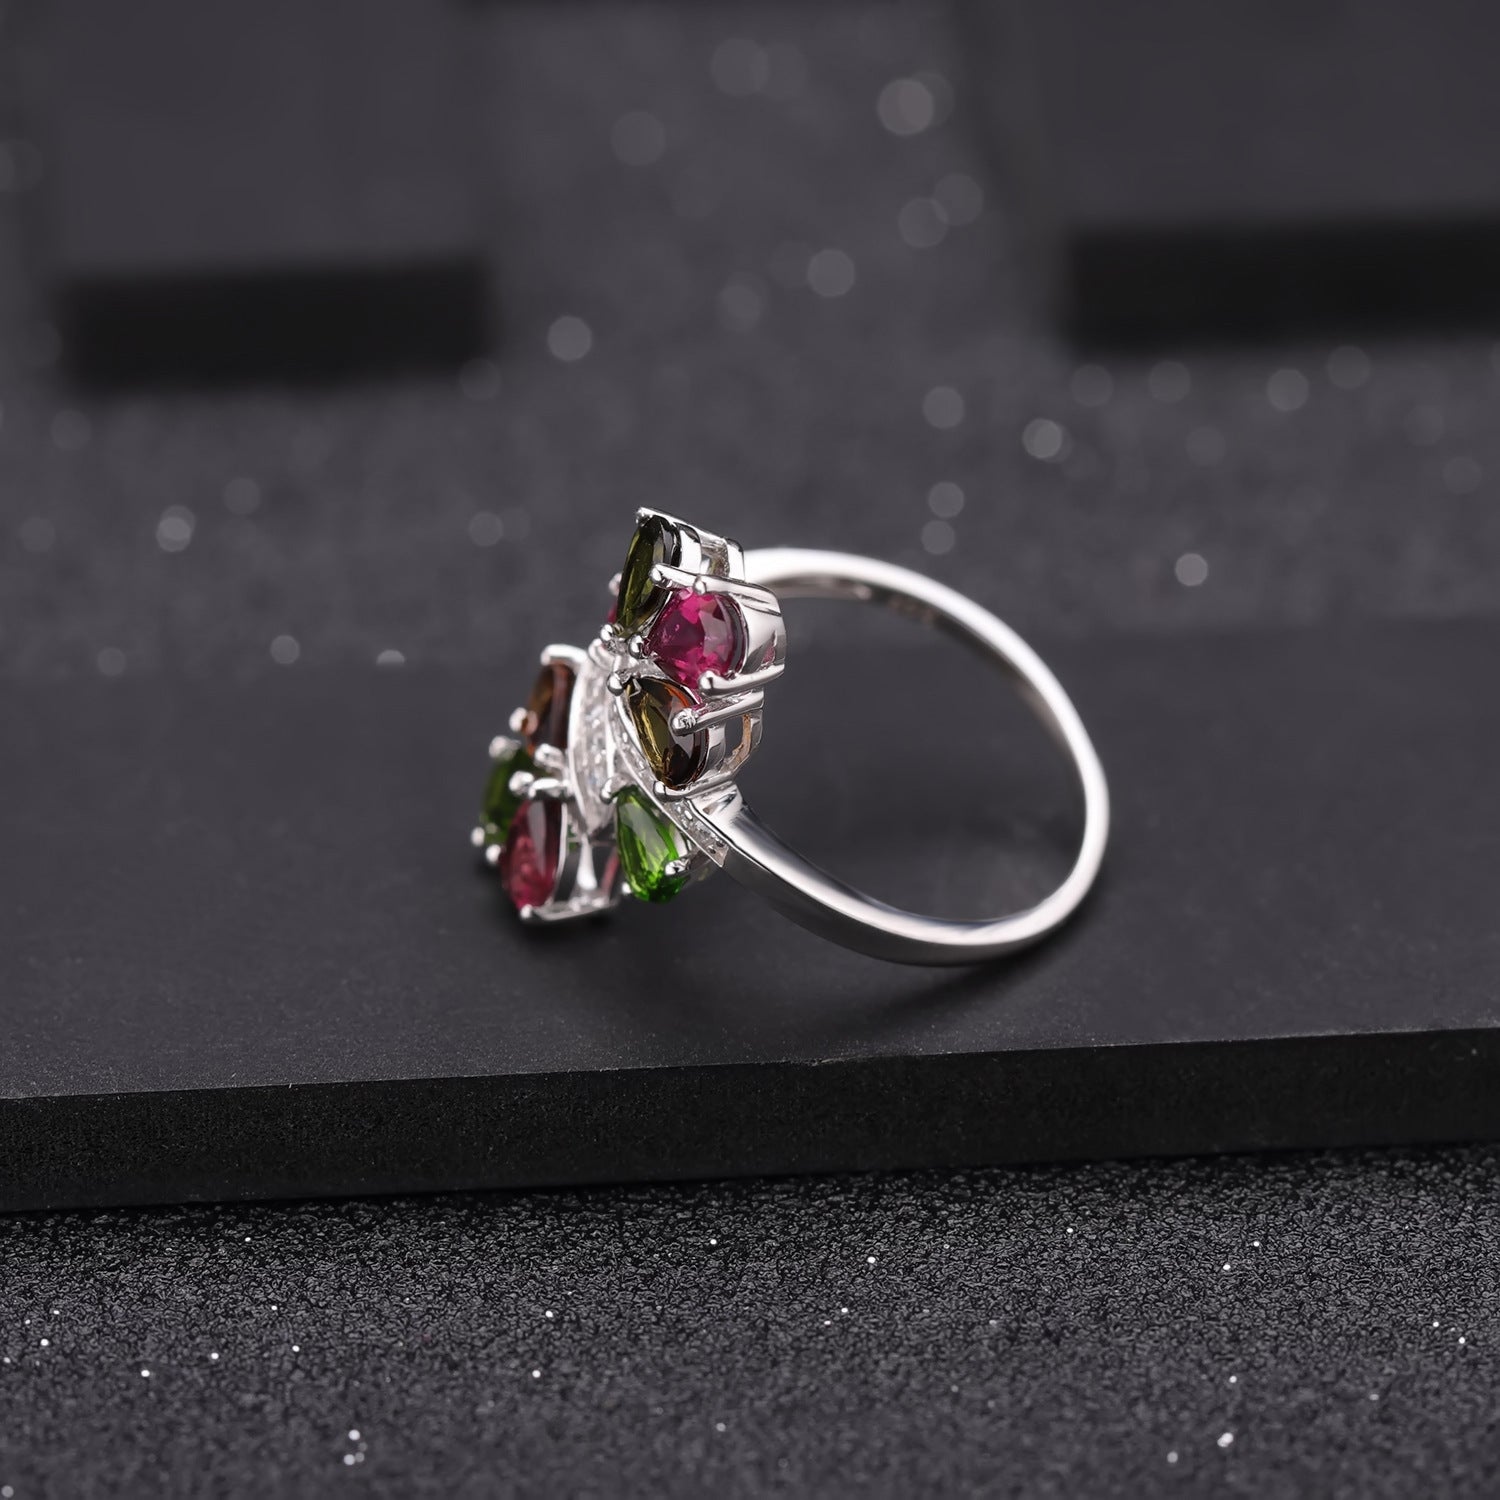 European Retro Design Inlaid Natural Colourful Gemstones Silver Ring for Women